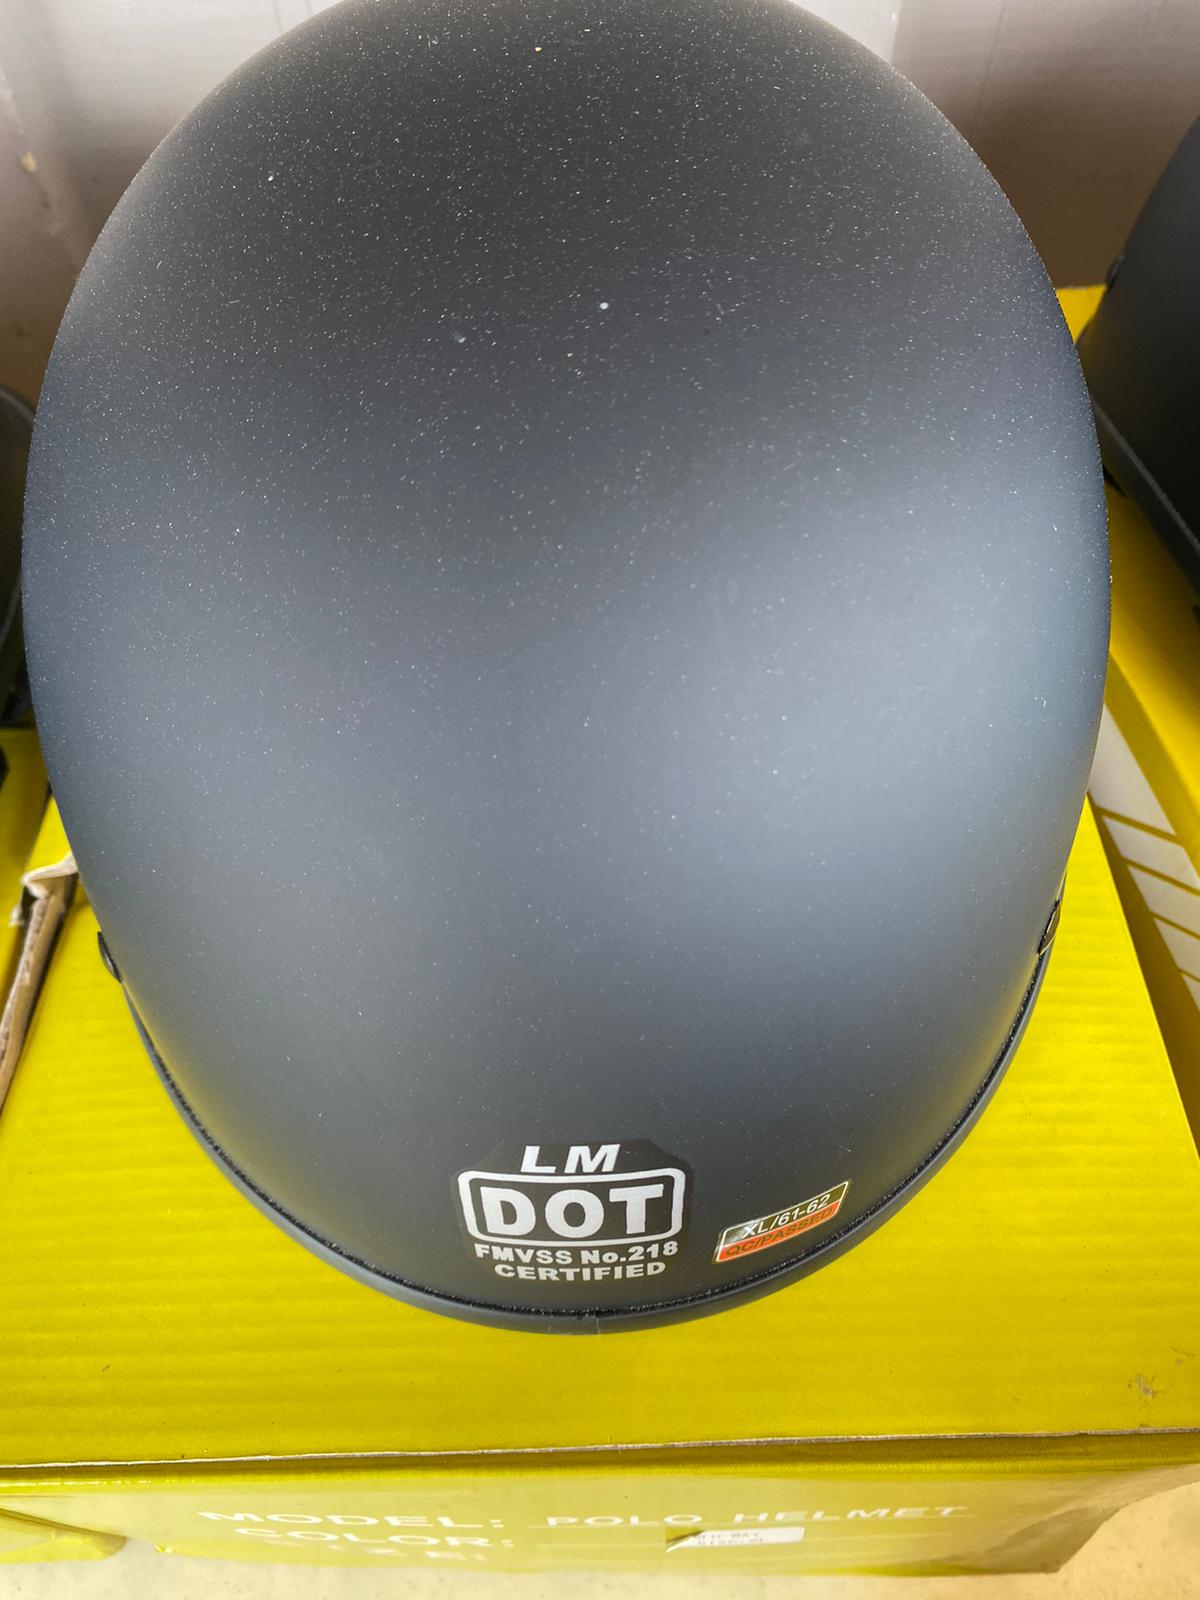 Beanie Skull Motorcycle Half Helmet - Small and Light DOT Approved Skull Cap / No Peak